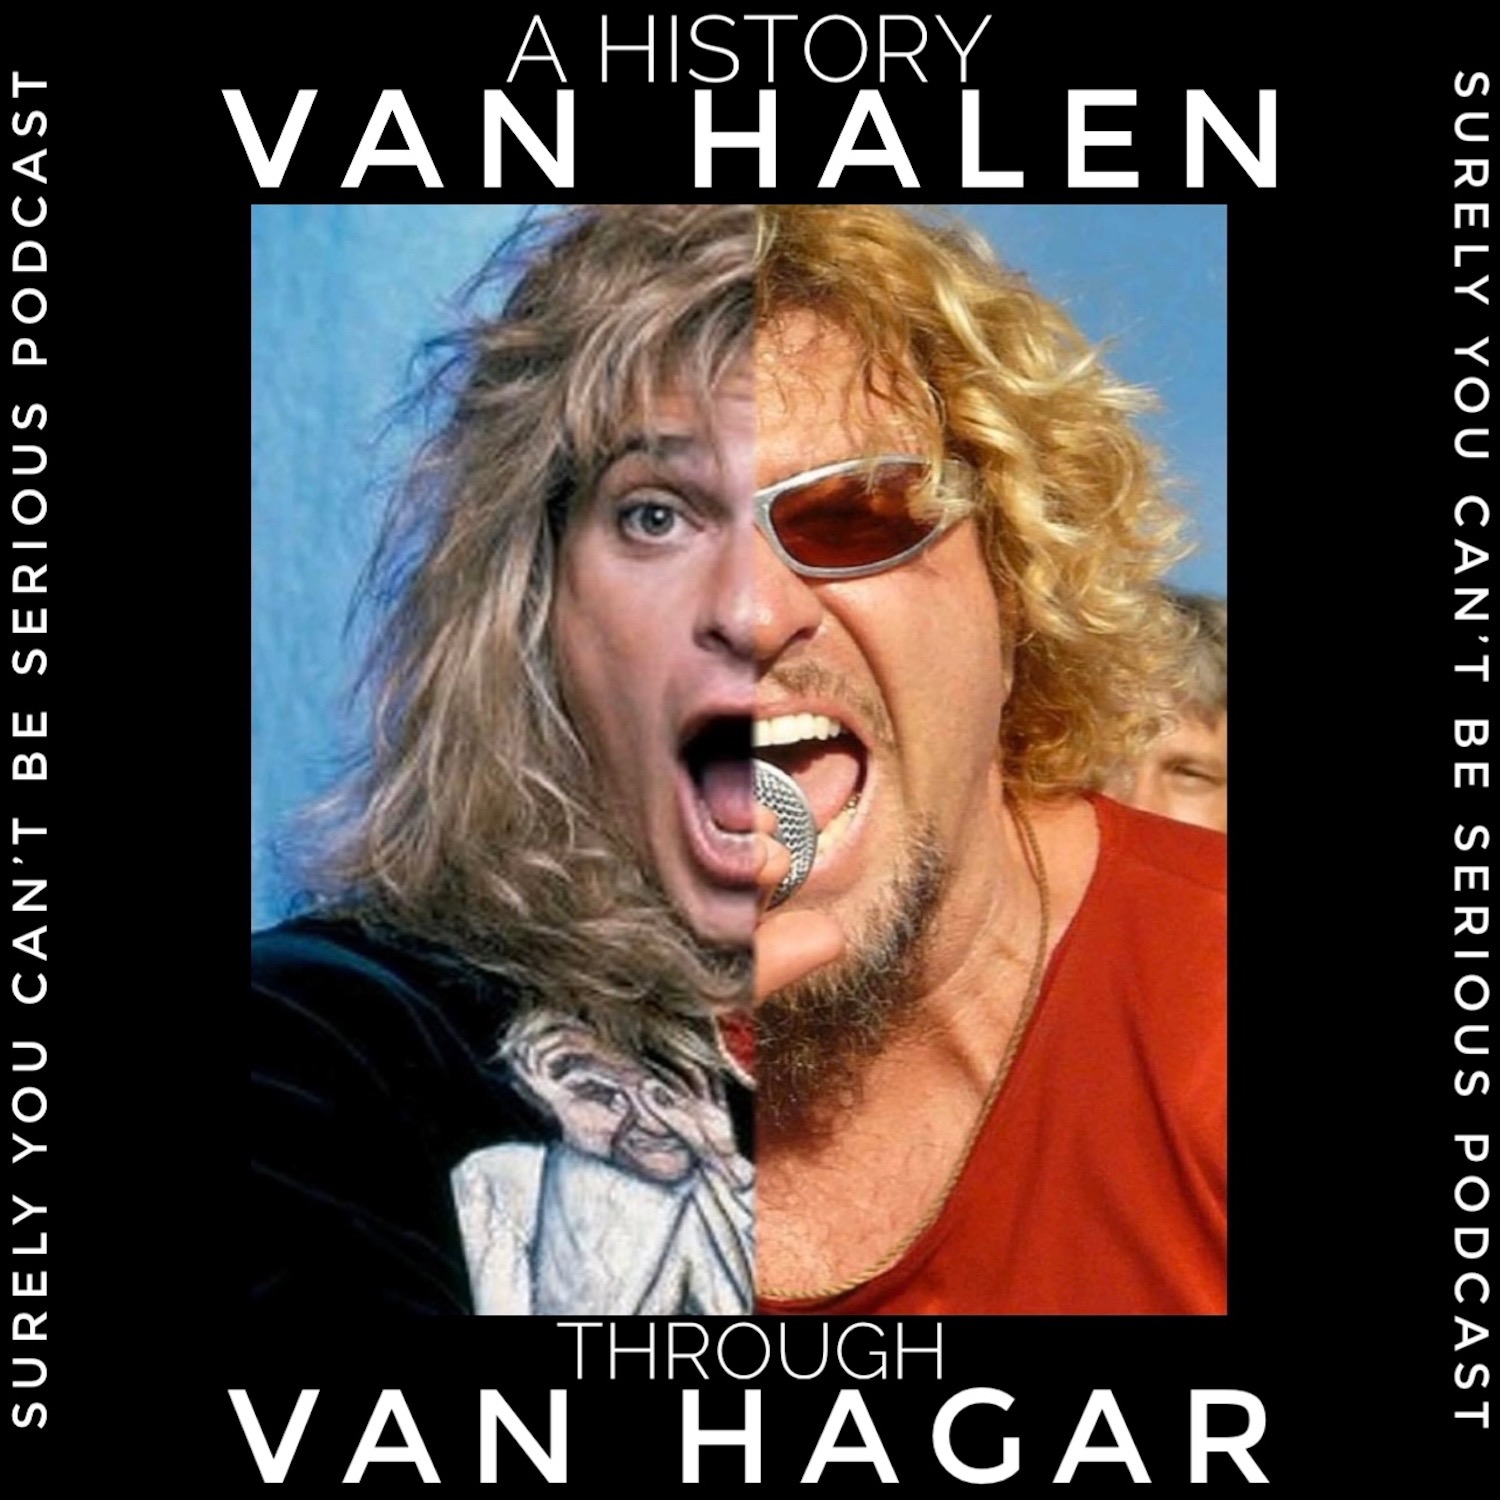 A History: Van Halen through Van Hagar (Part 1 of 3) "Pretty Woman to Eruption"